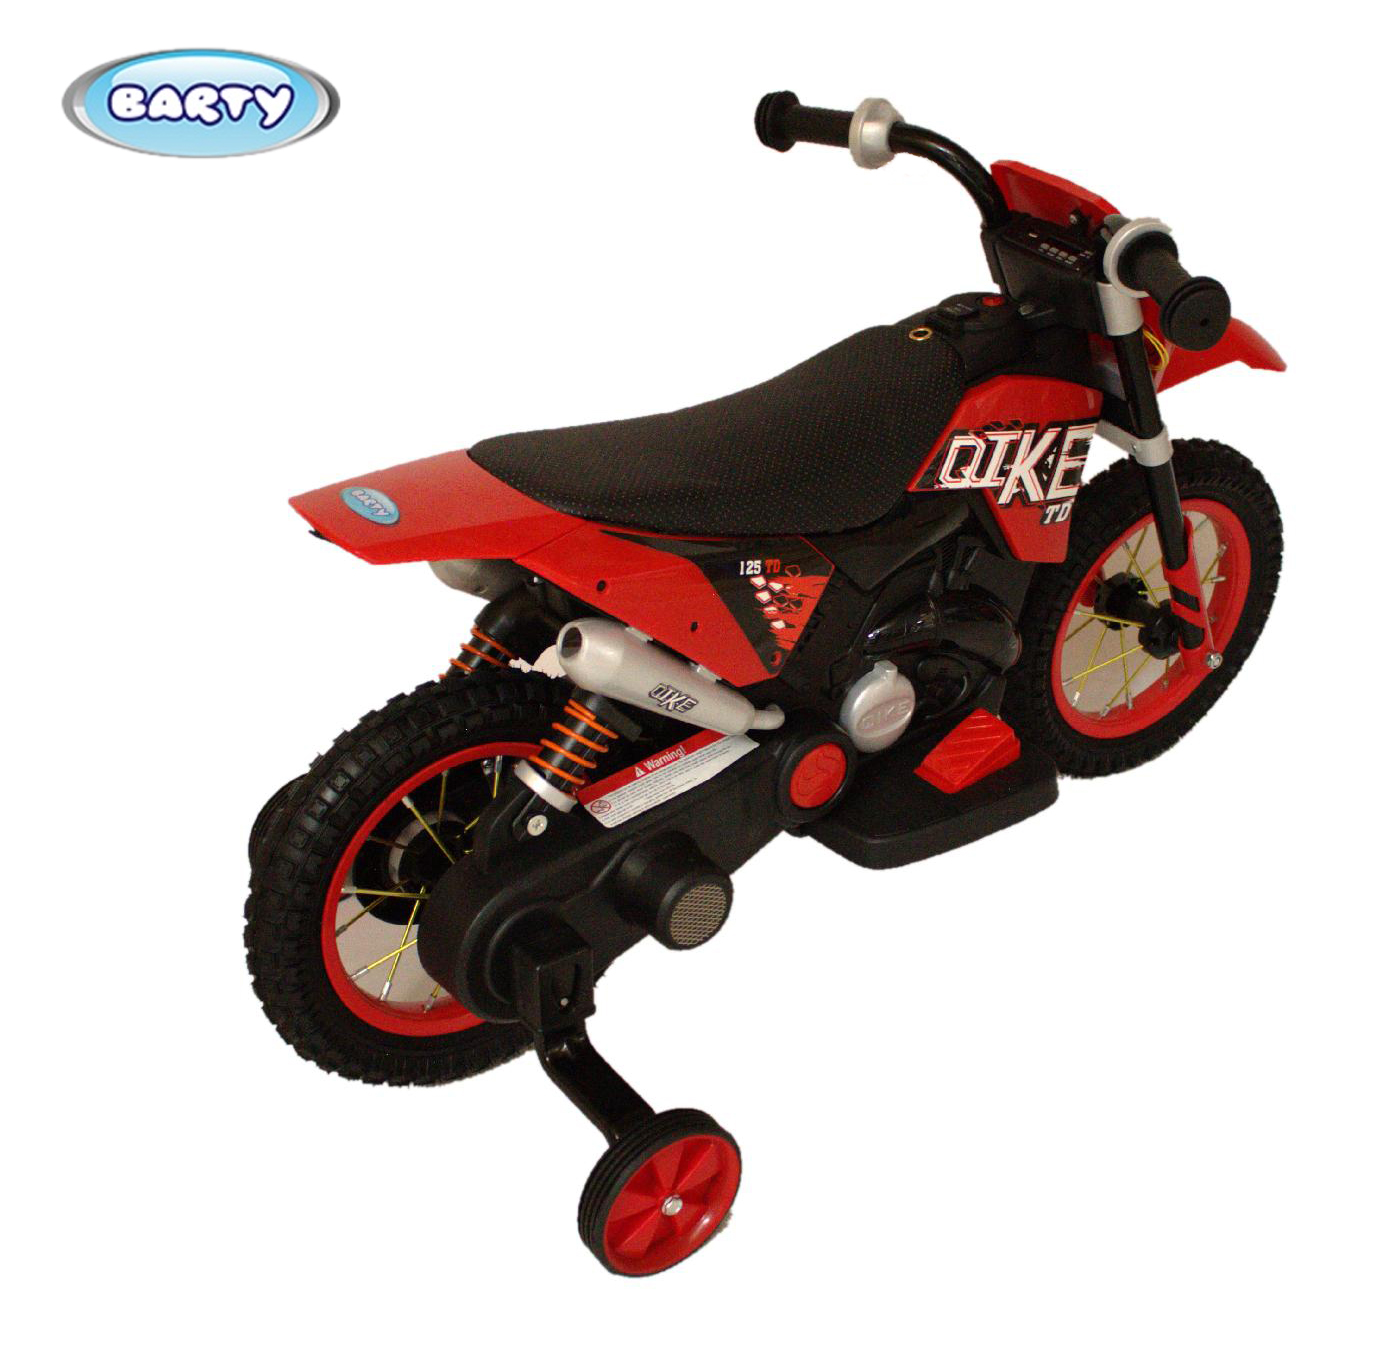 Электромотоцикл BARTY CROSS (Красный) YM68